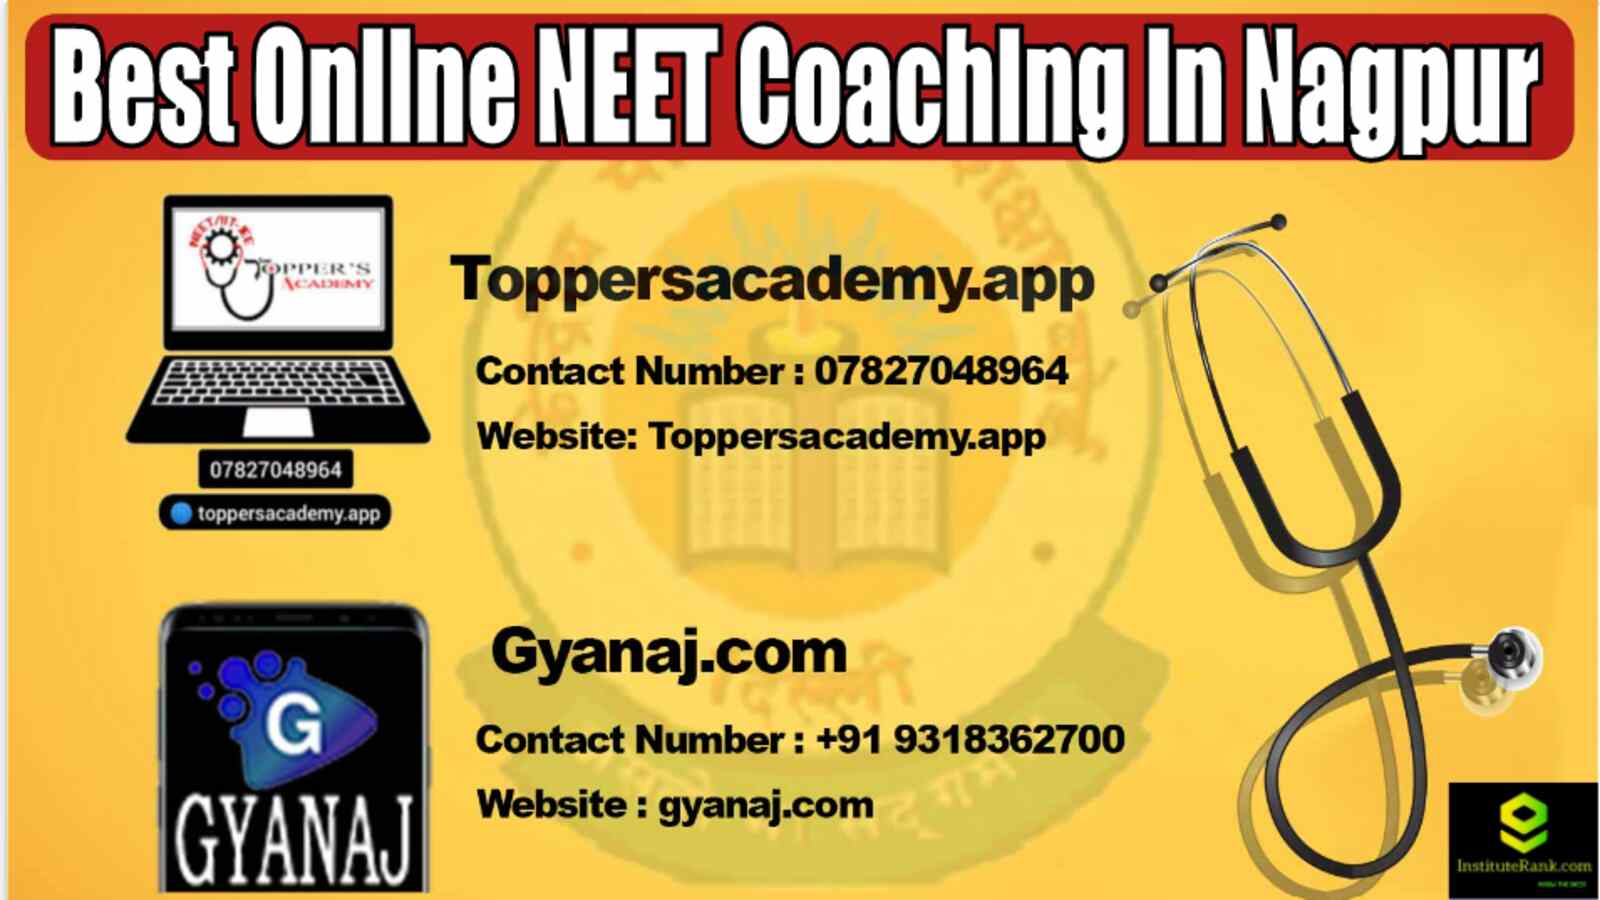 Best Online NEET Coaching in Nagpur 2022